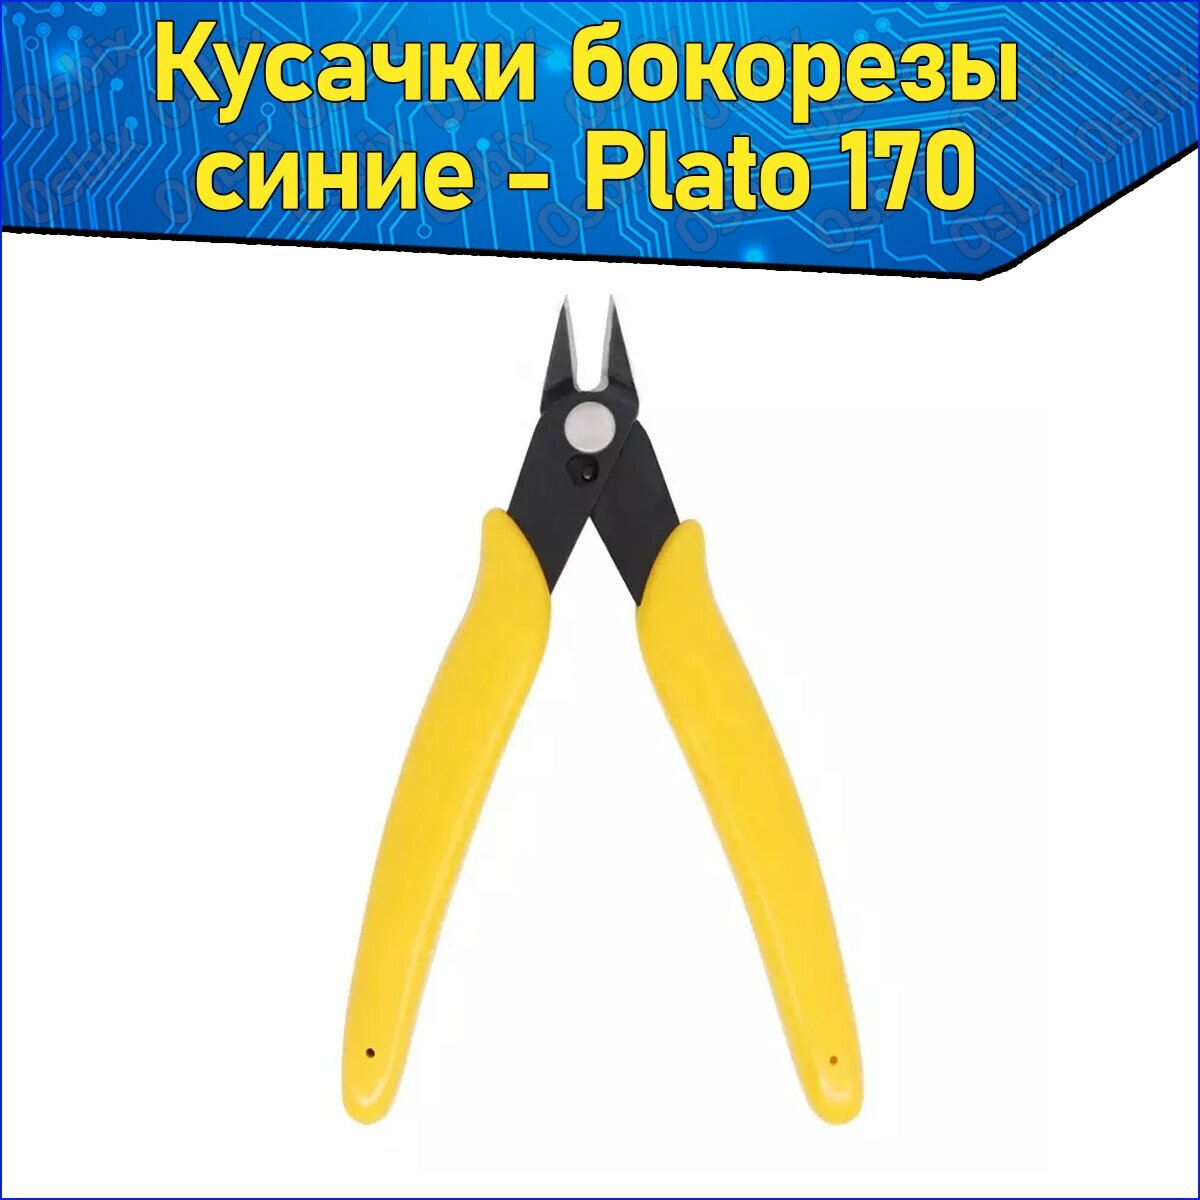 Кусачки бокорезы Plato 170 для проволоки до 1 мм Желтые